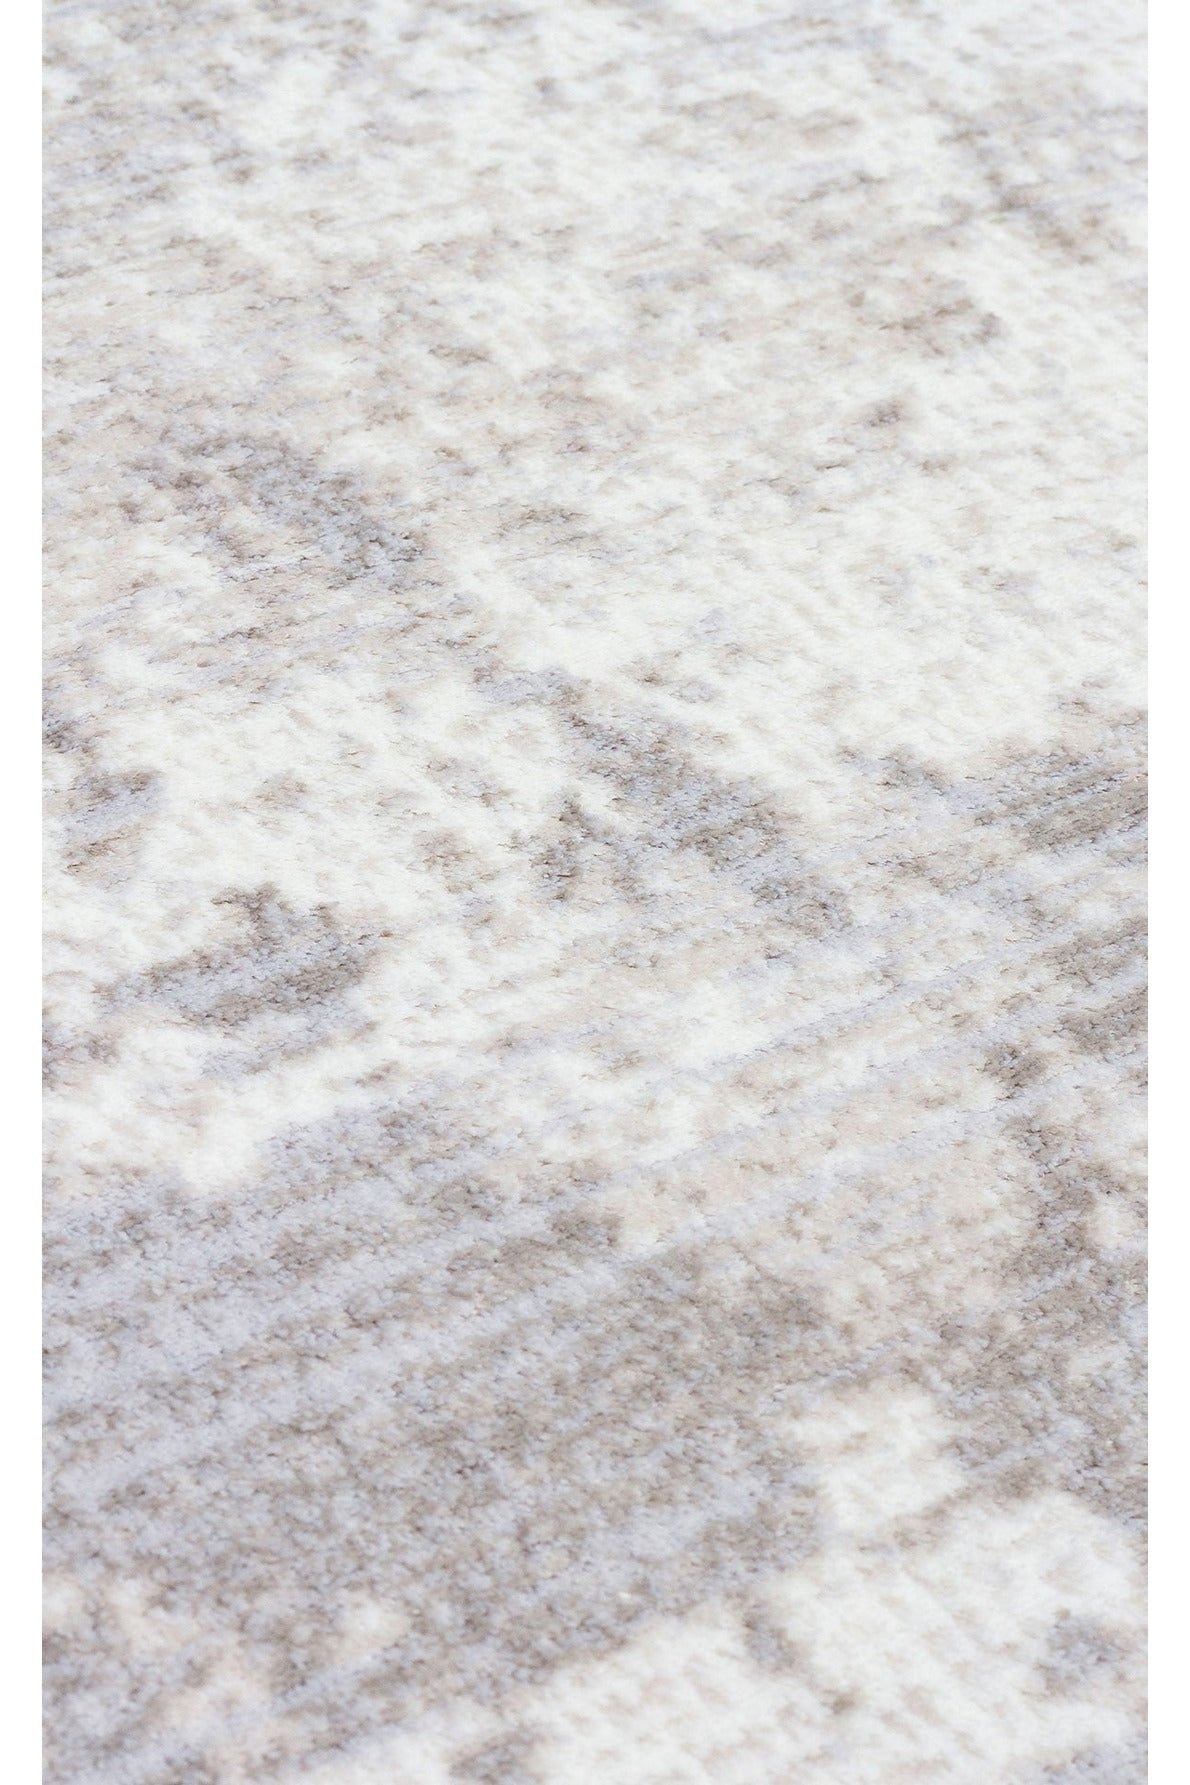 #Turkish_Carpets_Rugs# #Modern_Carpets# #Abrash_Carpets#Blv 04 Cream Beige